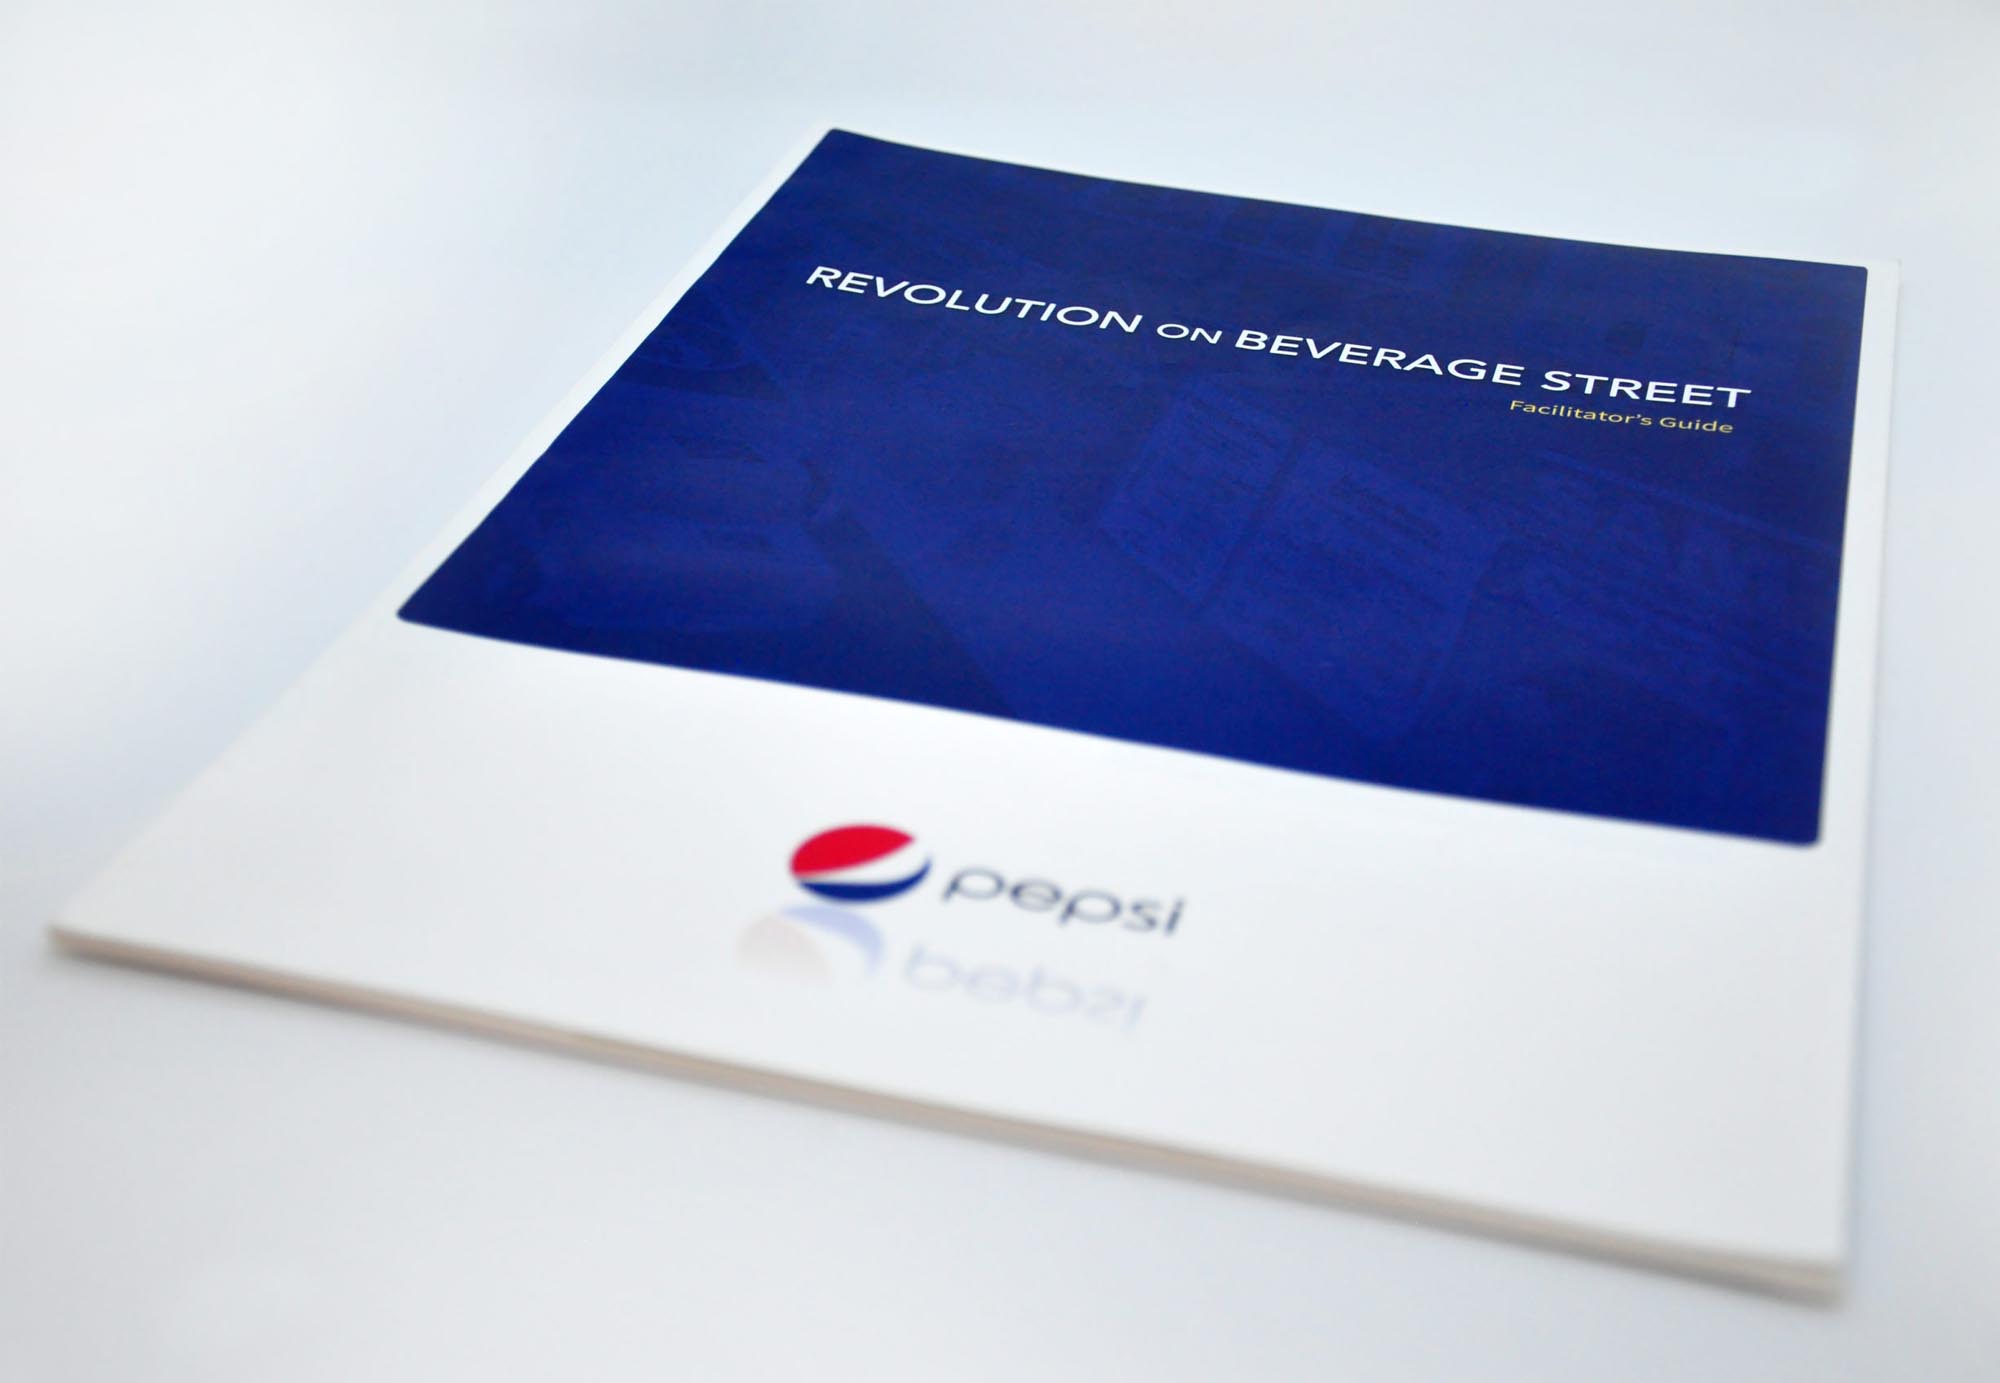 Revolution on beverage street - Pepsi case study